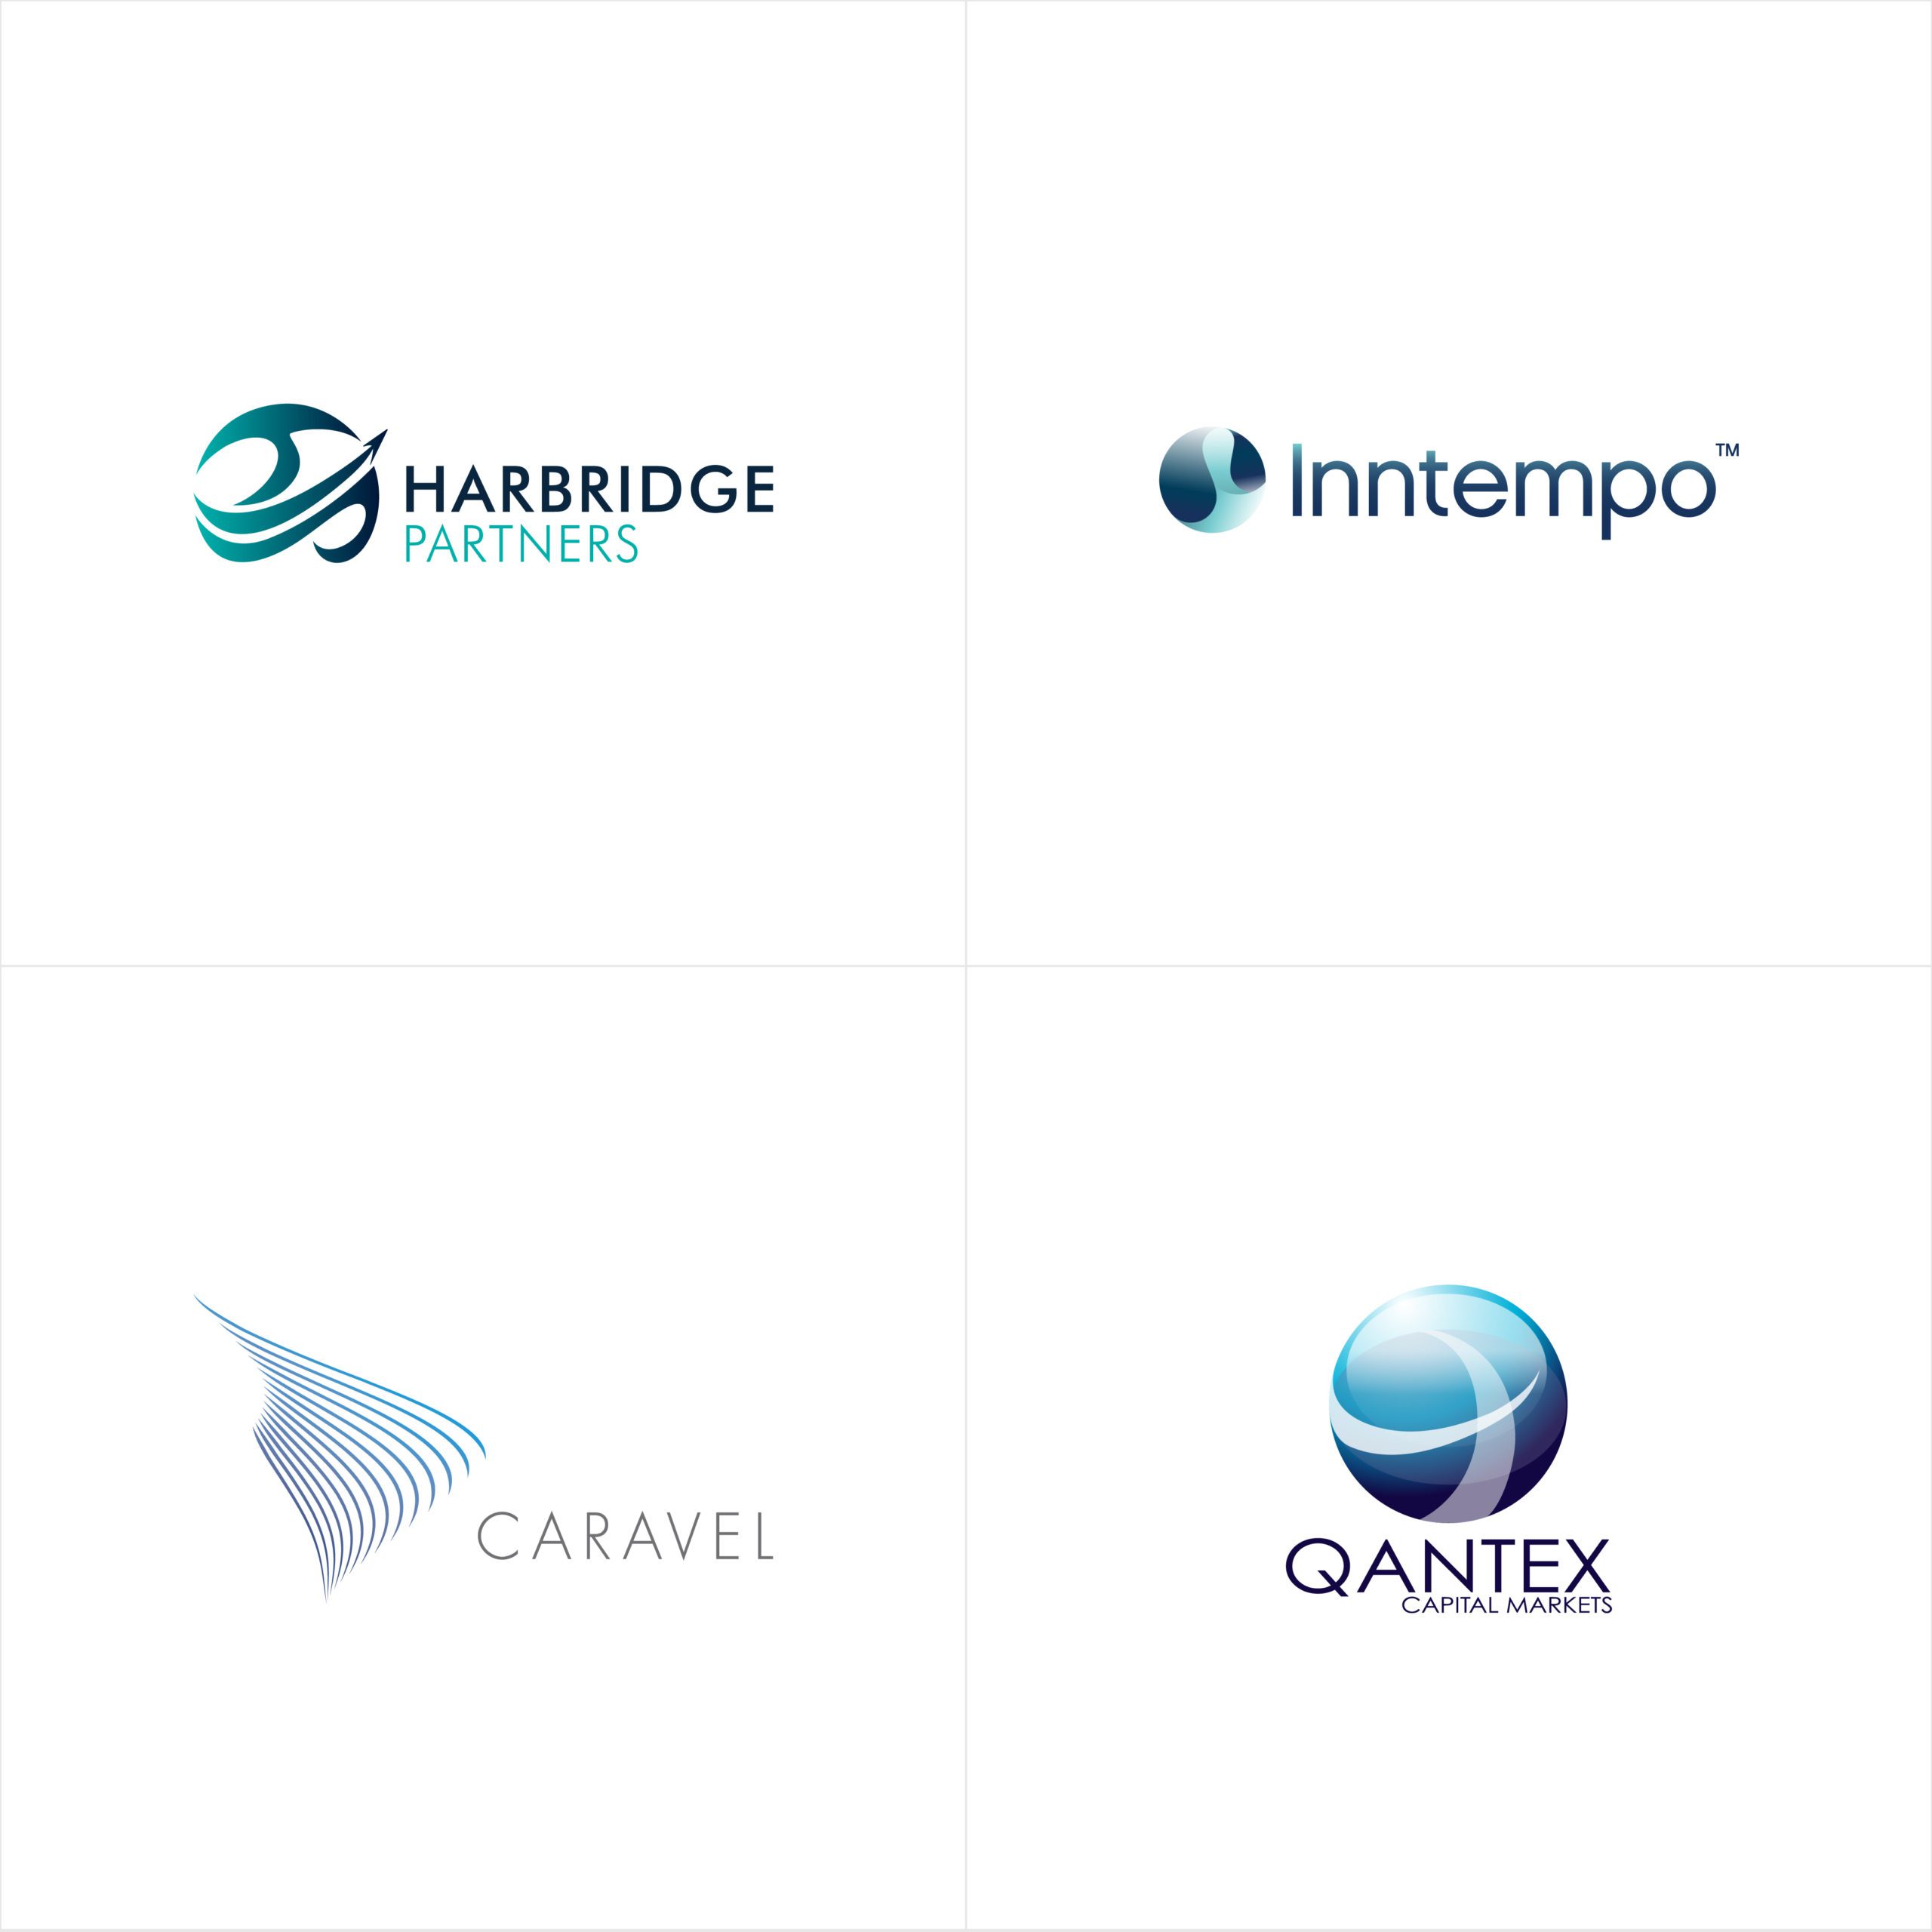 Harbridge Partners Inntempo Caravel Qantex logo